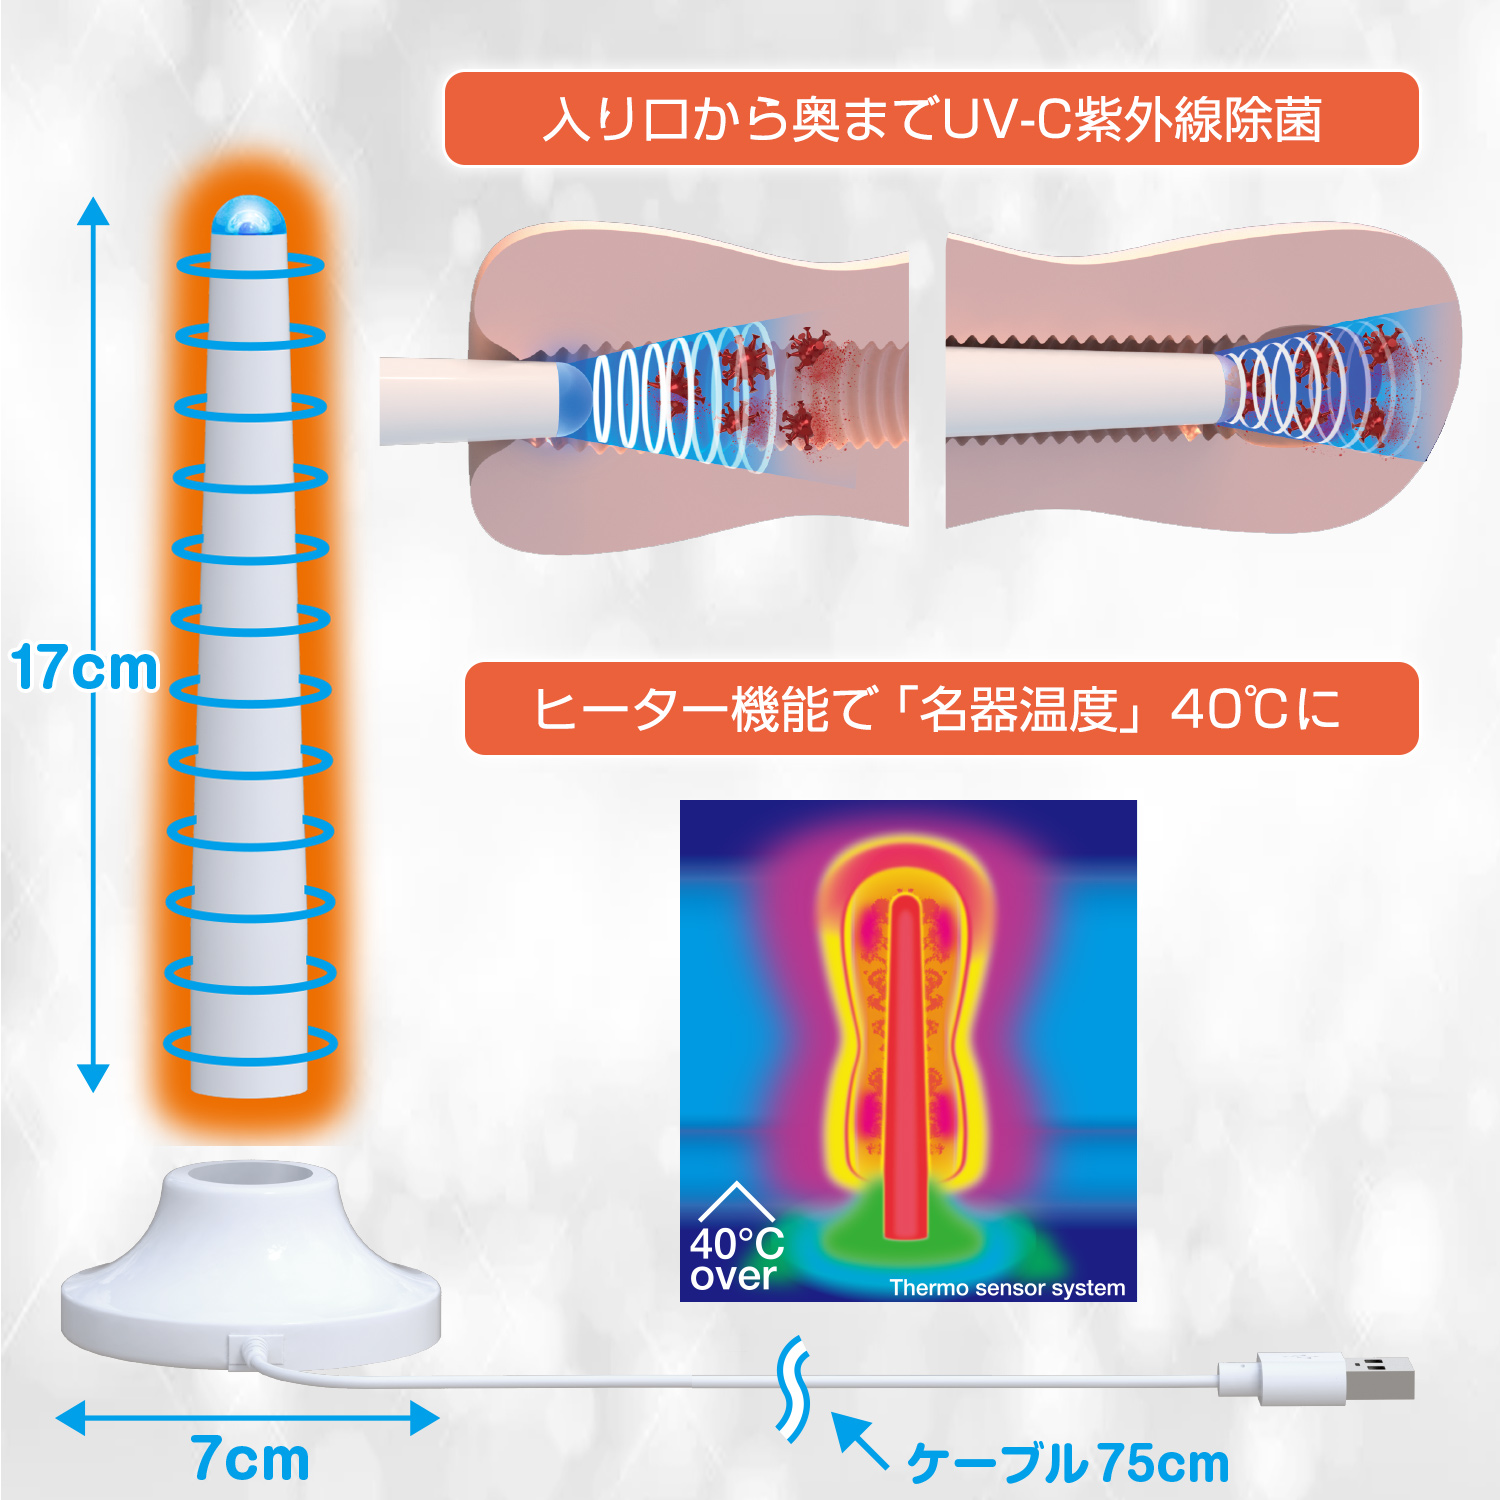 UV-Cオナホウォーマー(USB充電式・スタンド付)